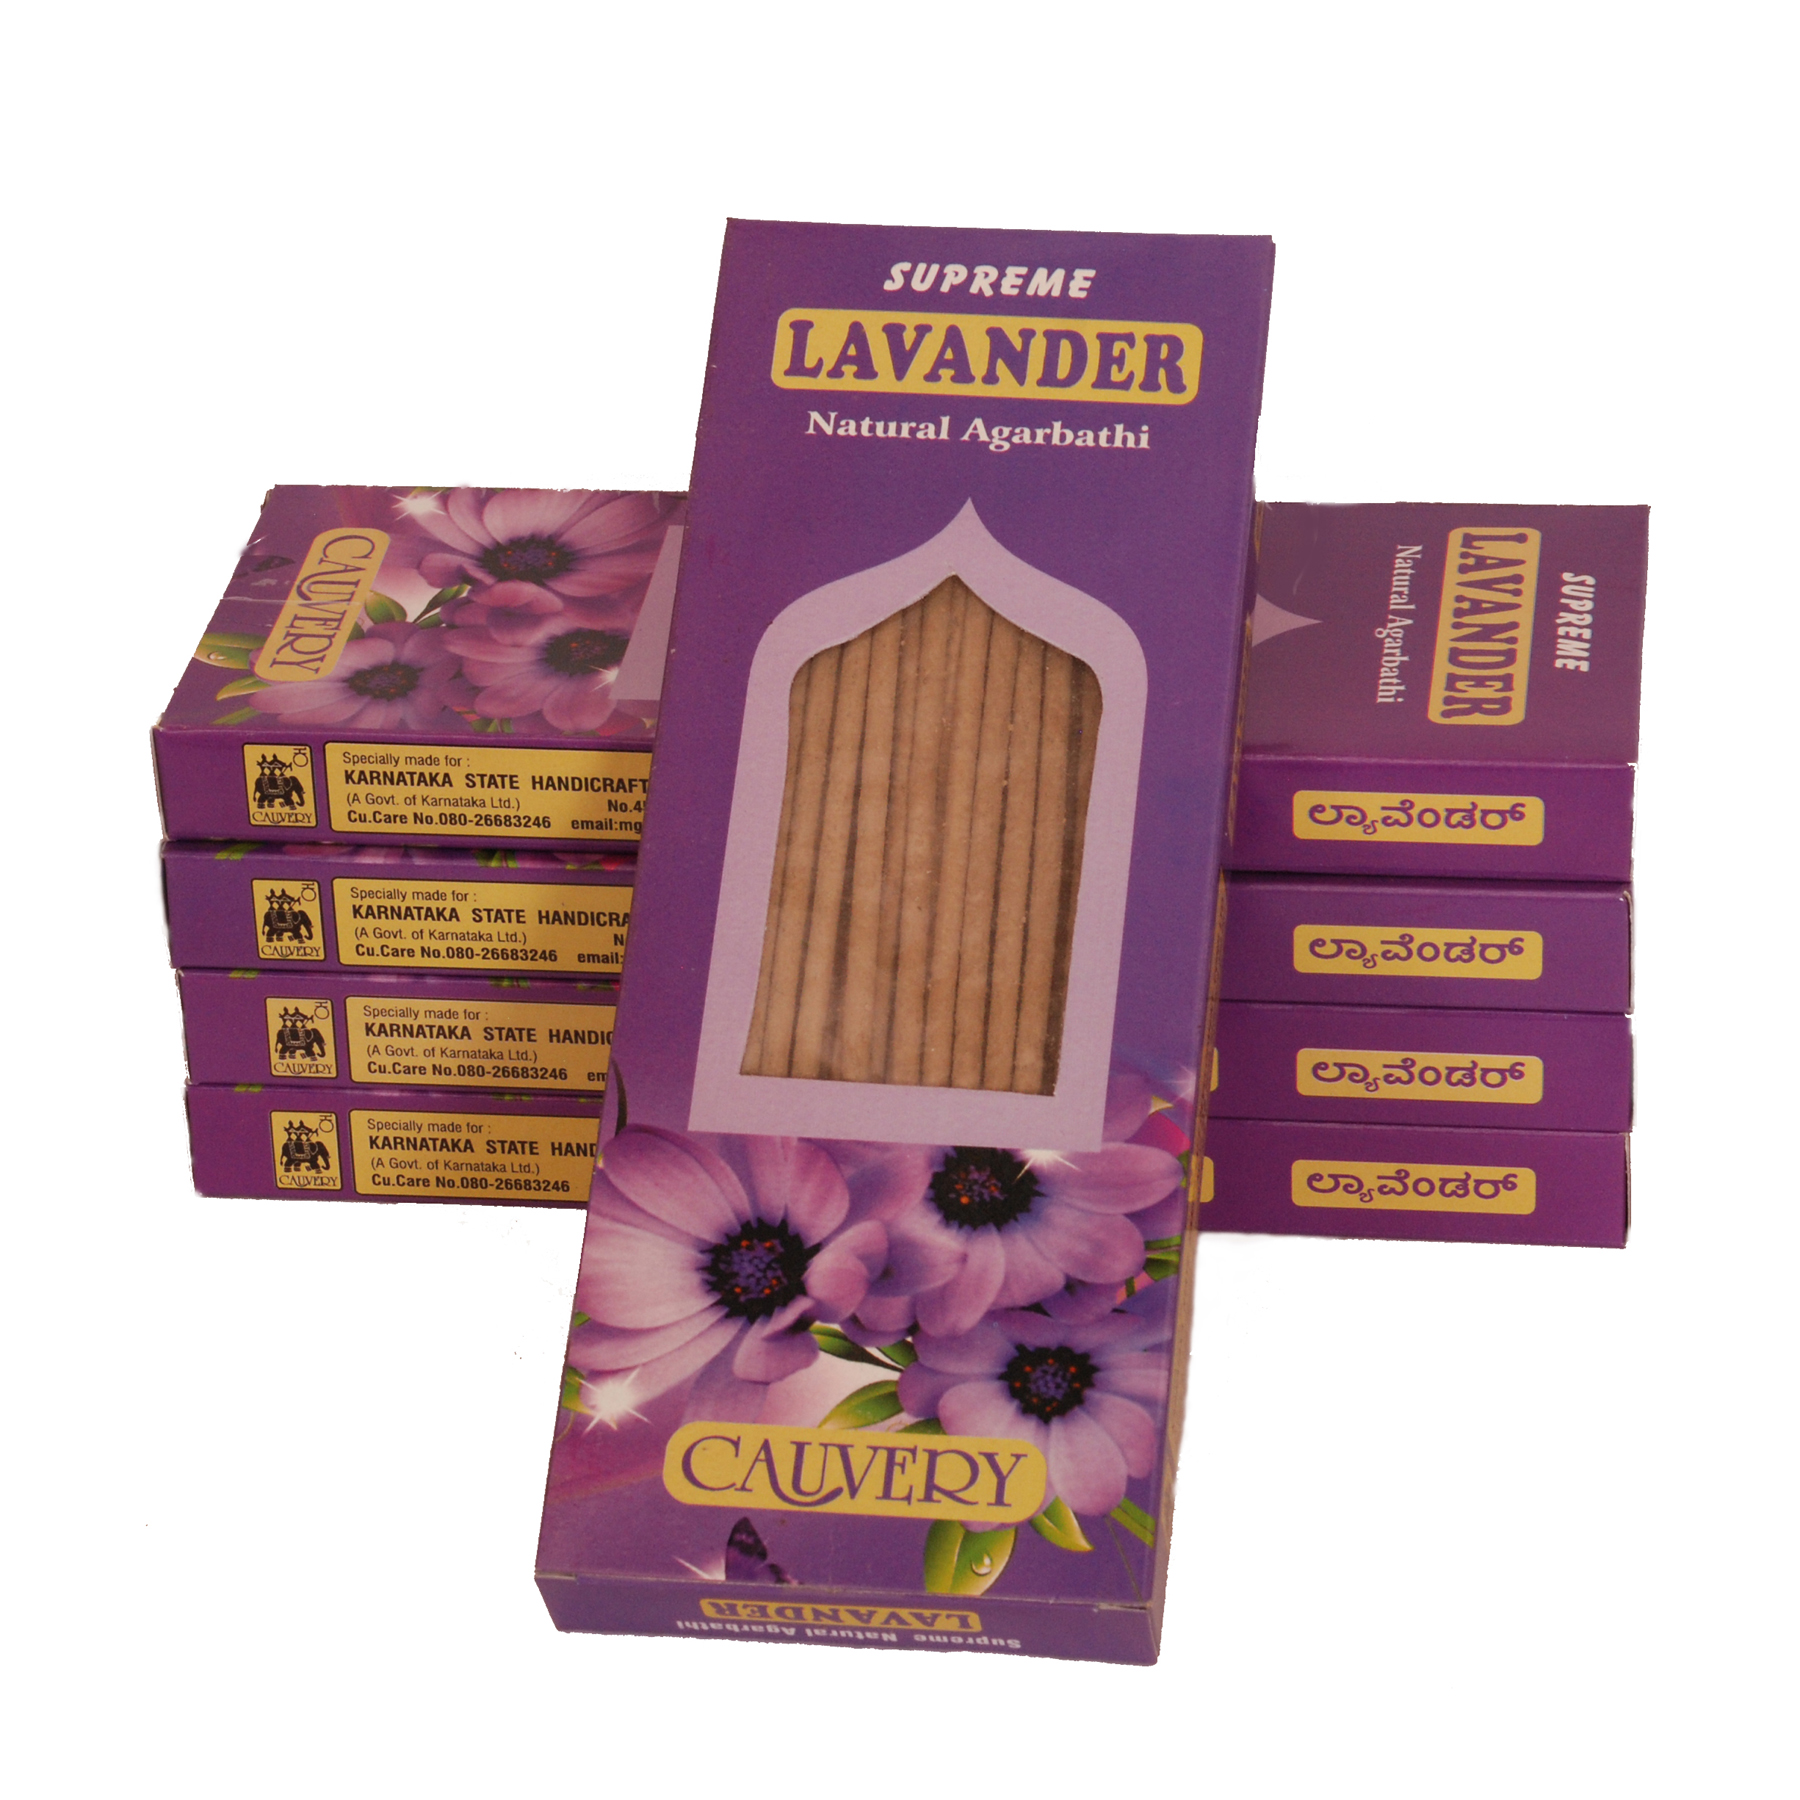 Cauvery Supreme Lavender Natural Agarbathi